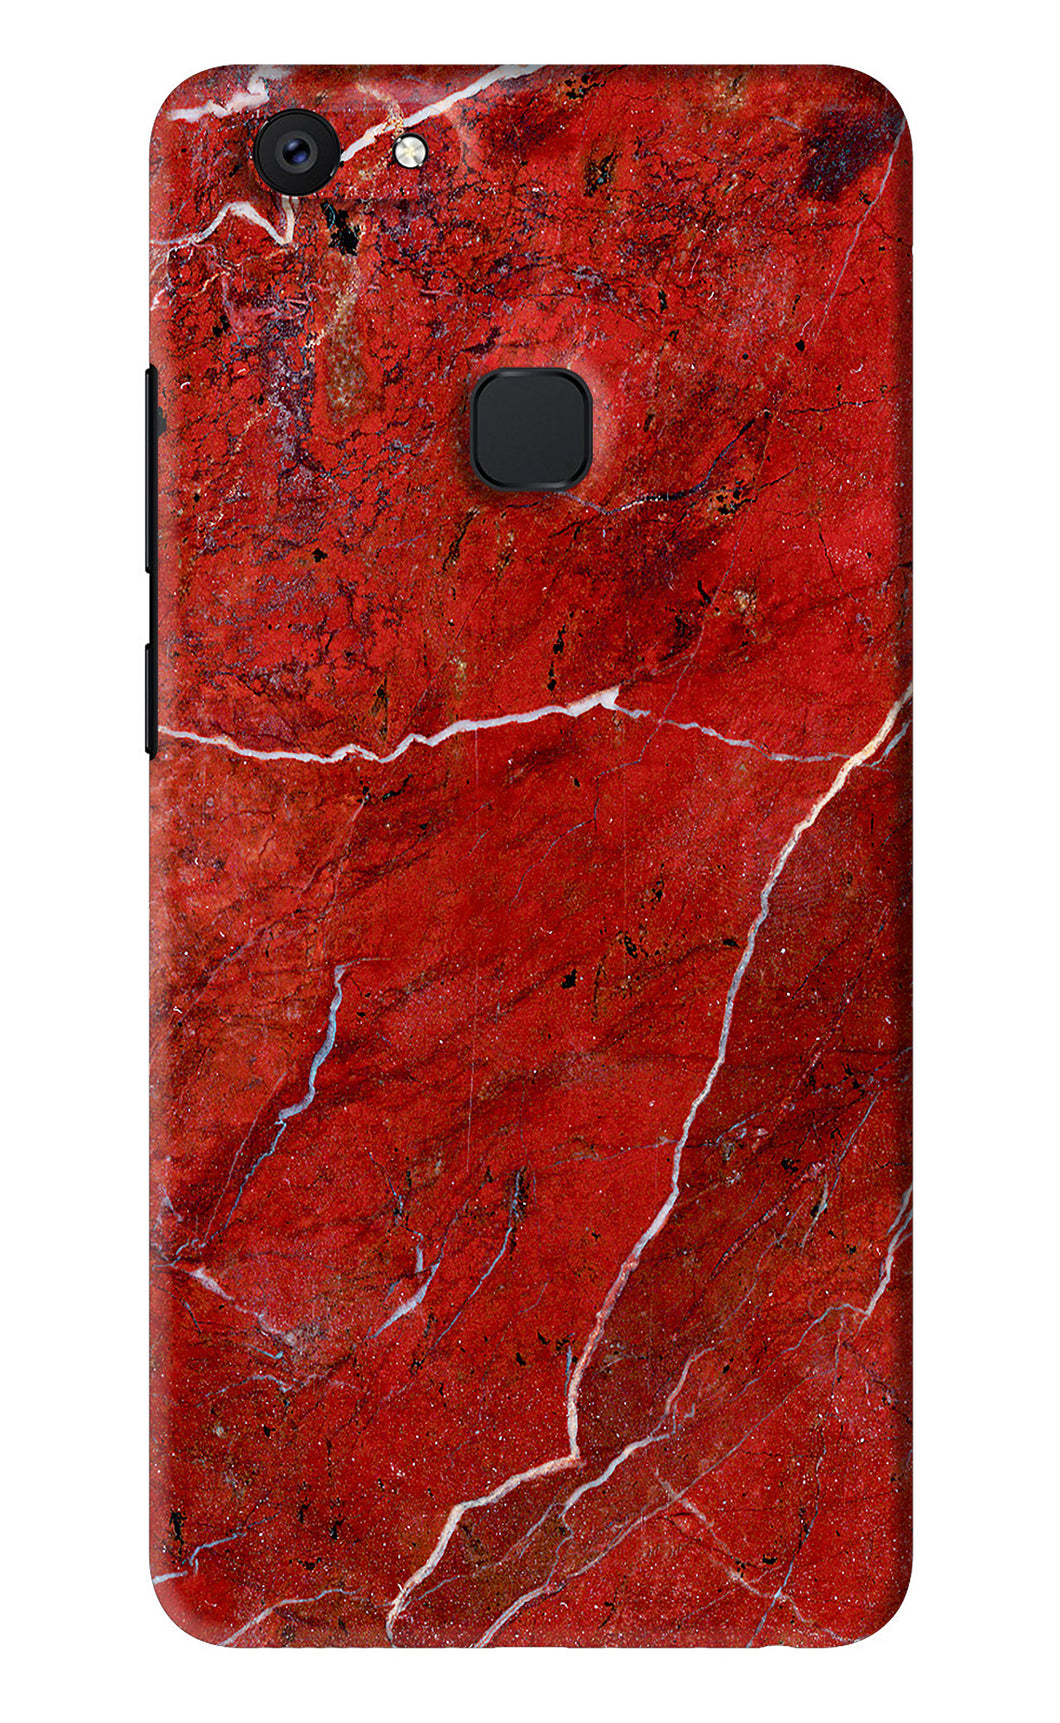 Red Marble Design Vivo V7 Back Skin Wrap